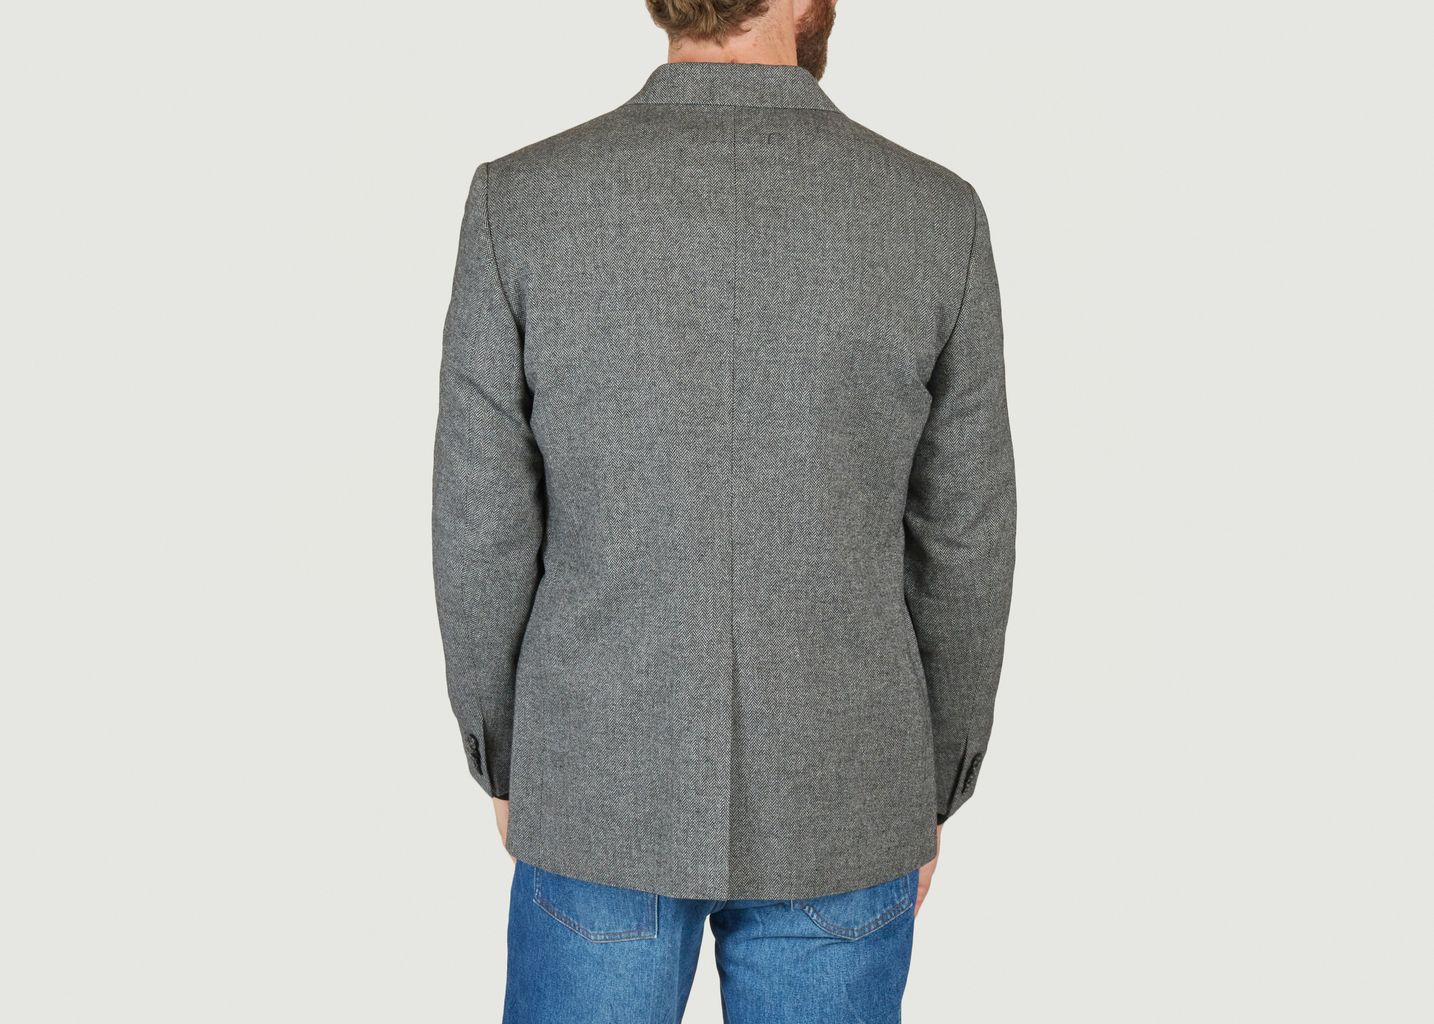 Herrington Suit Blazer - Gant